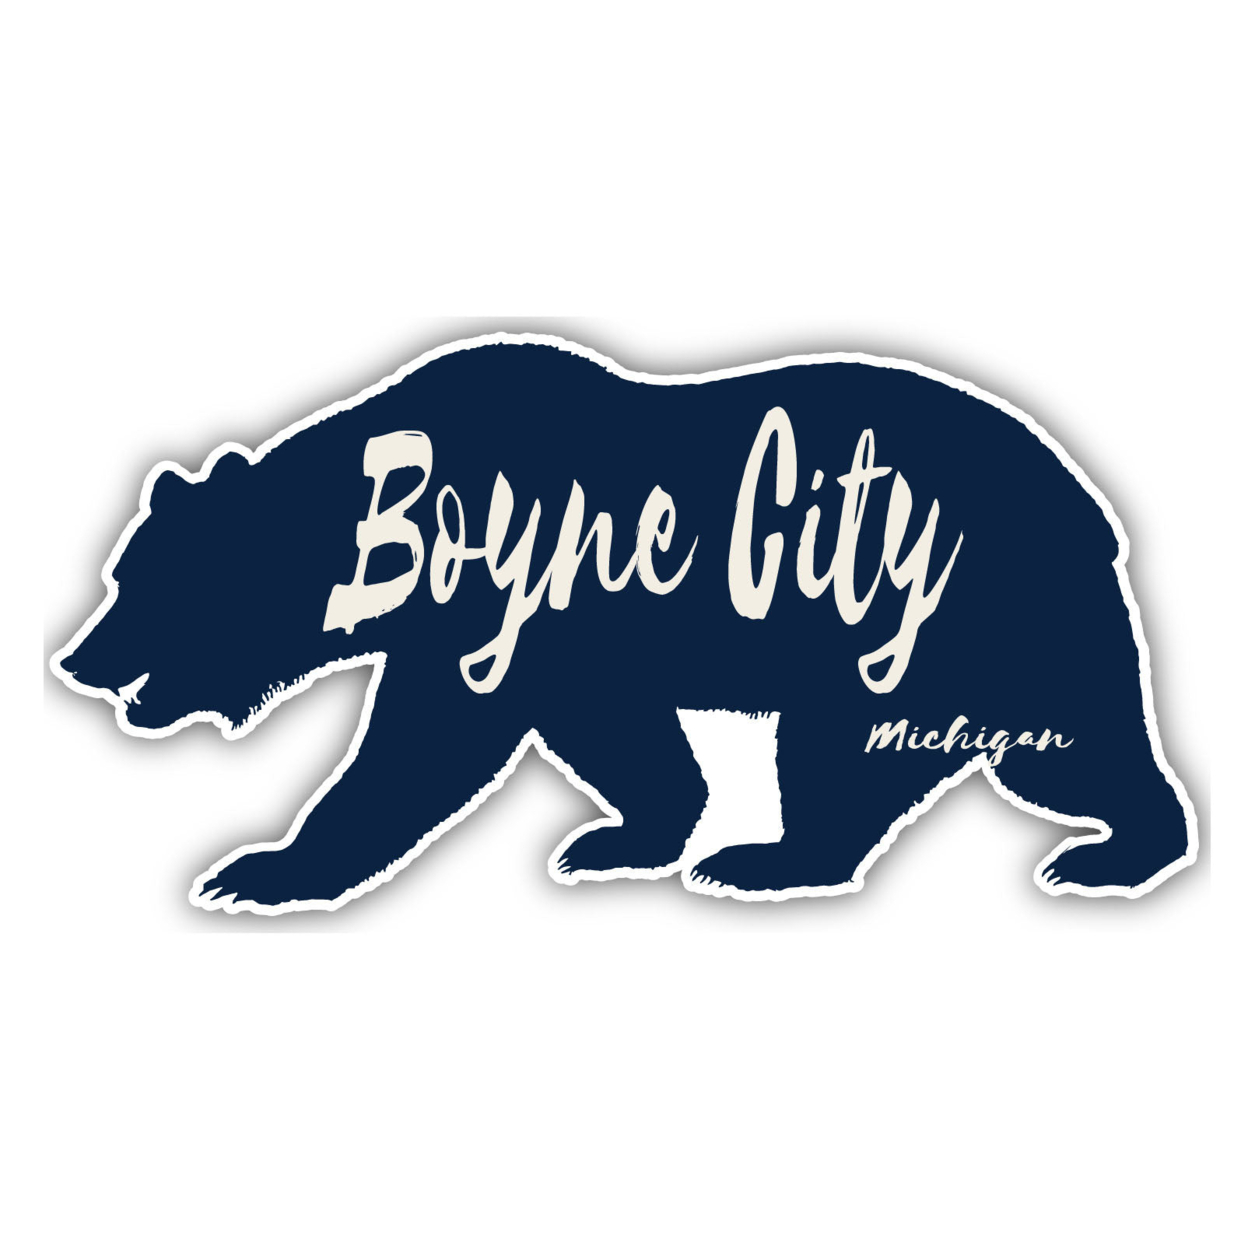 Boyne City Michigan Souvenir Decorative Stickers (Choose Theme And Size) - Single Unit, 10-Inch, Adventures Awaits